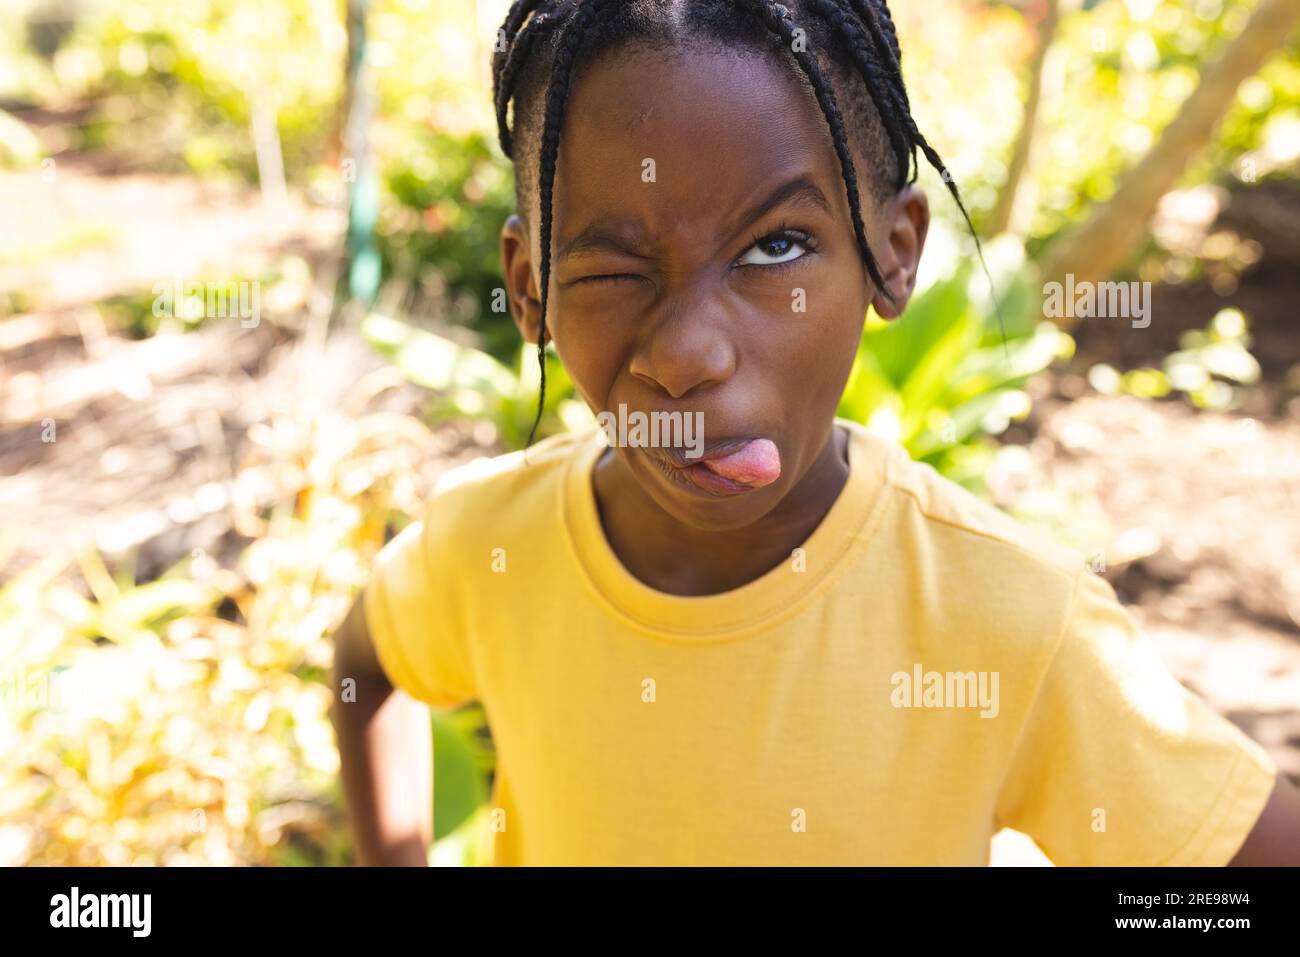 African american boy wearing yellow t-shirt, making funny face in garden Stock Photo